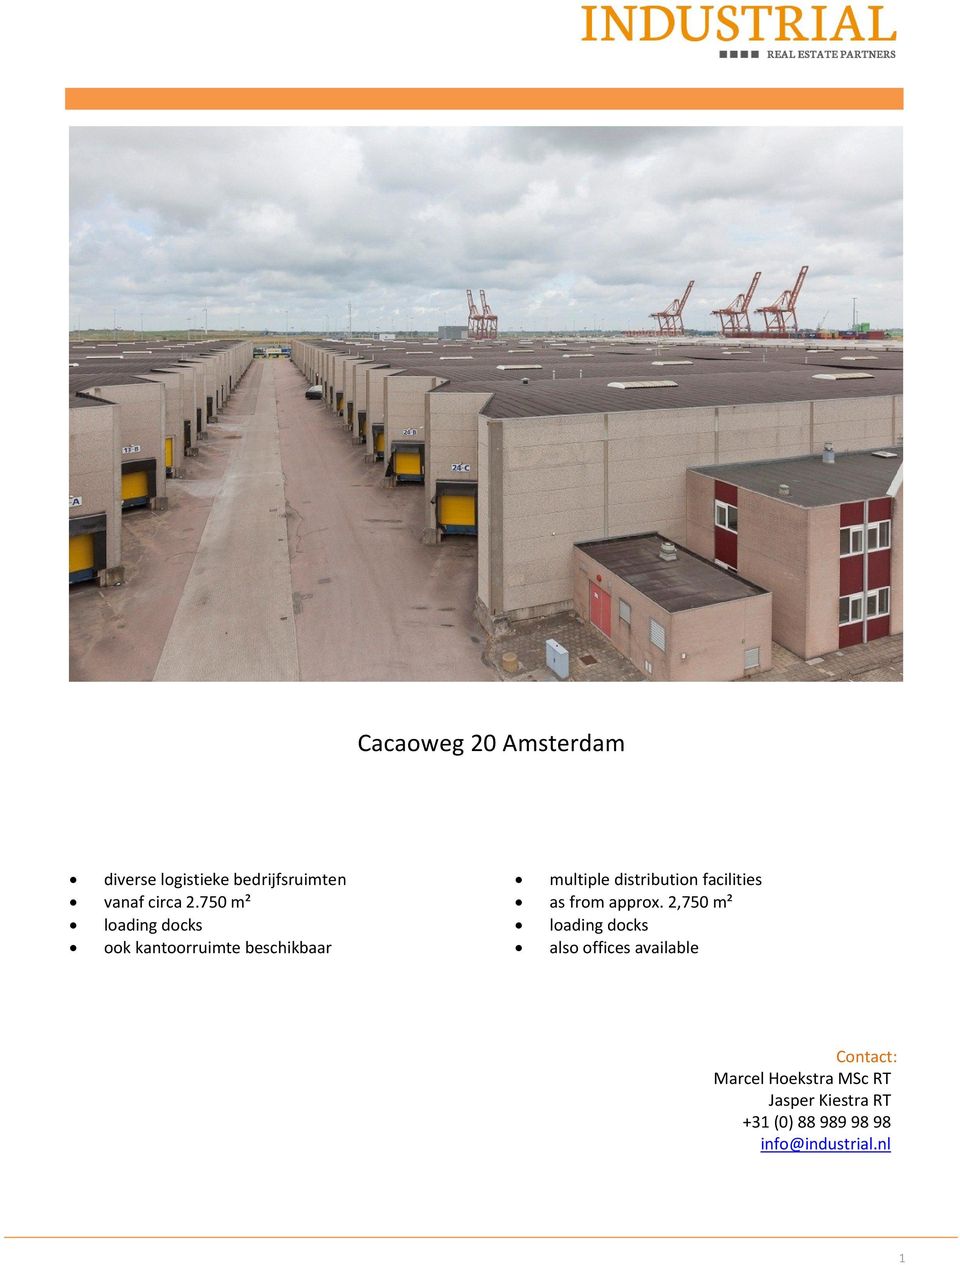 2,750 m² loading docks loading docks ook kantoorruimte beschikbaar also